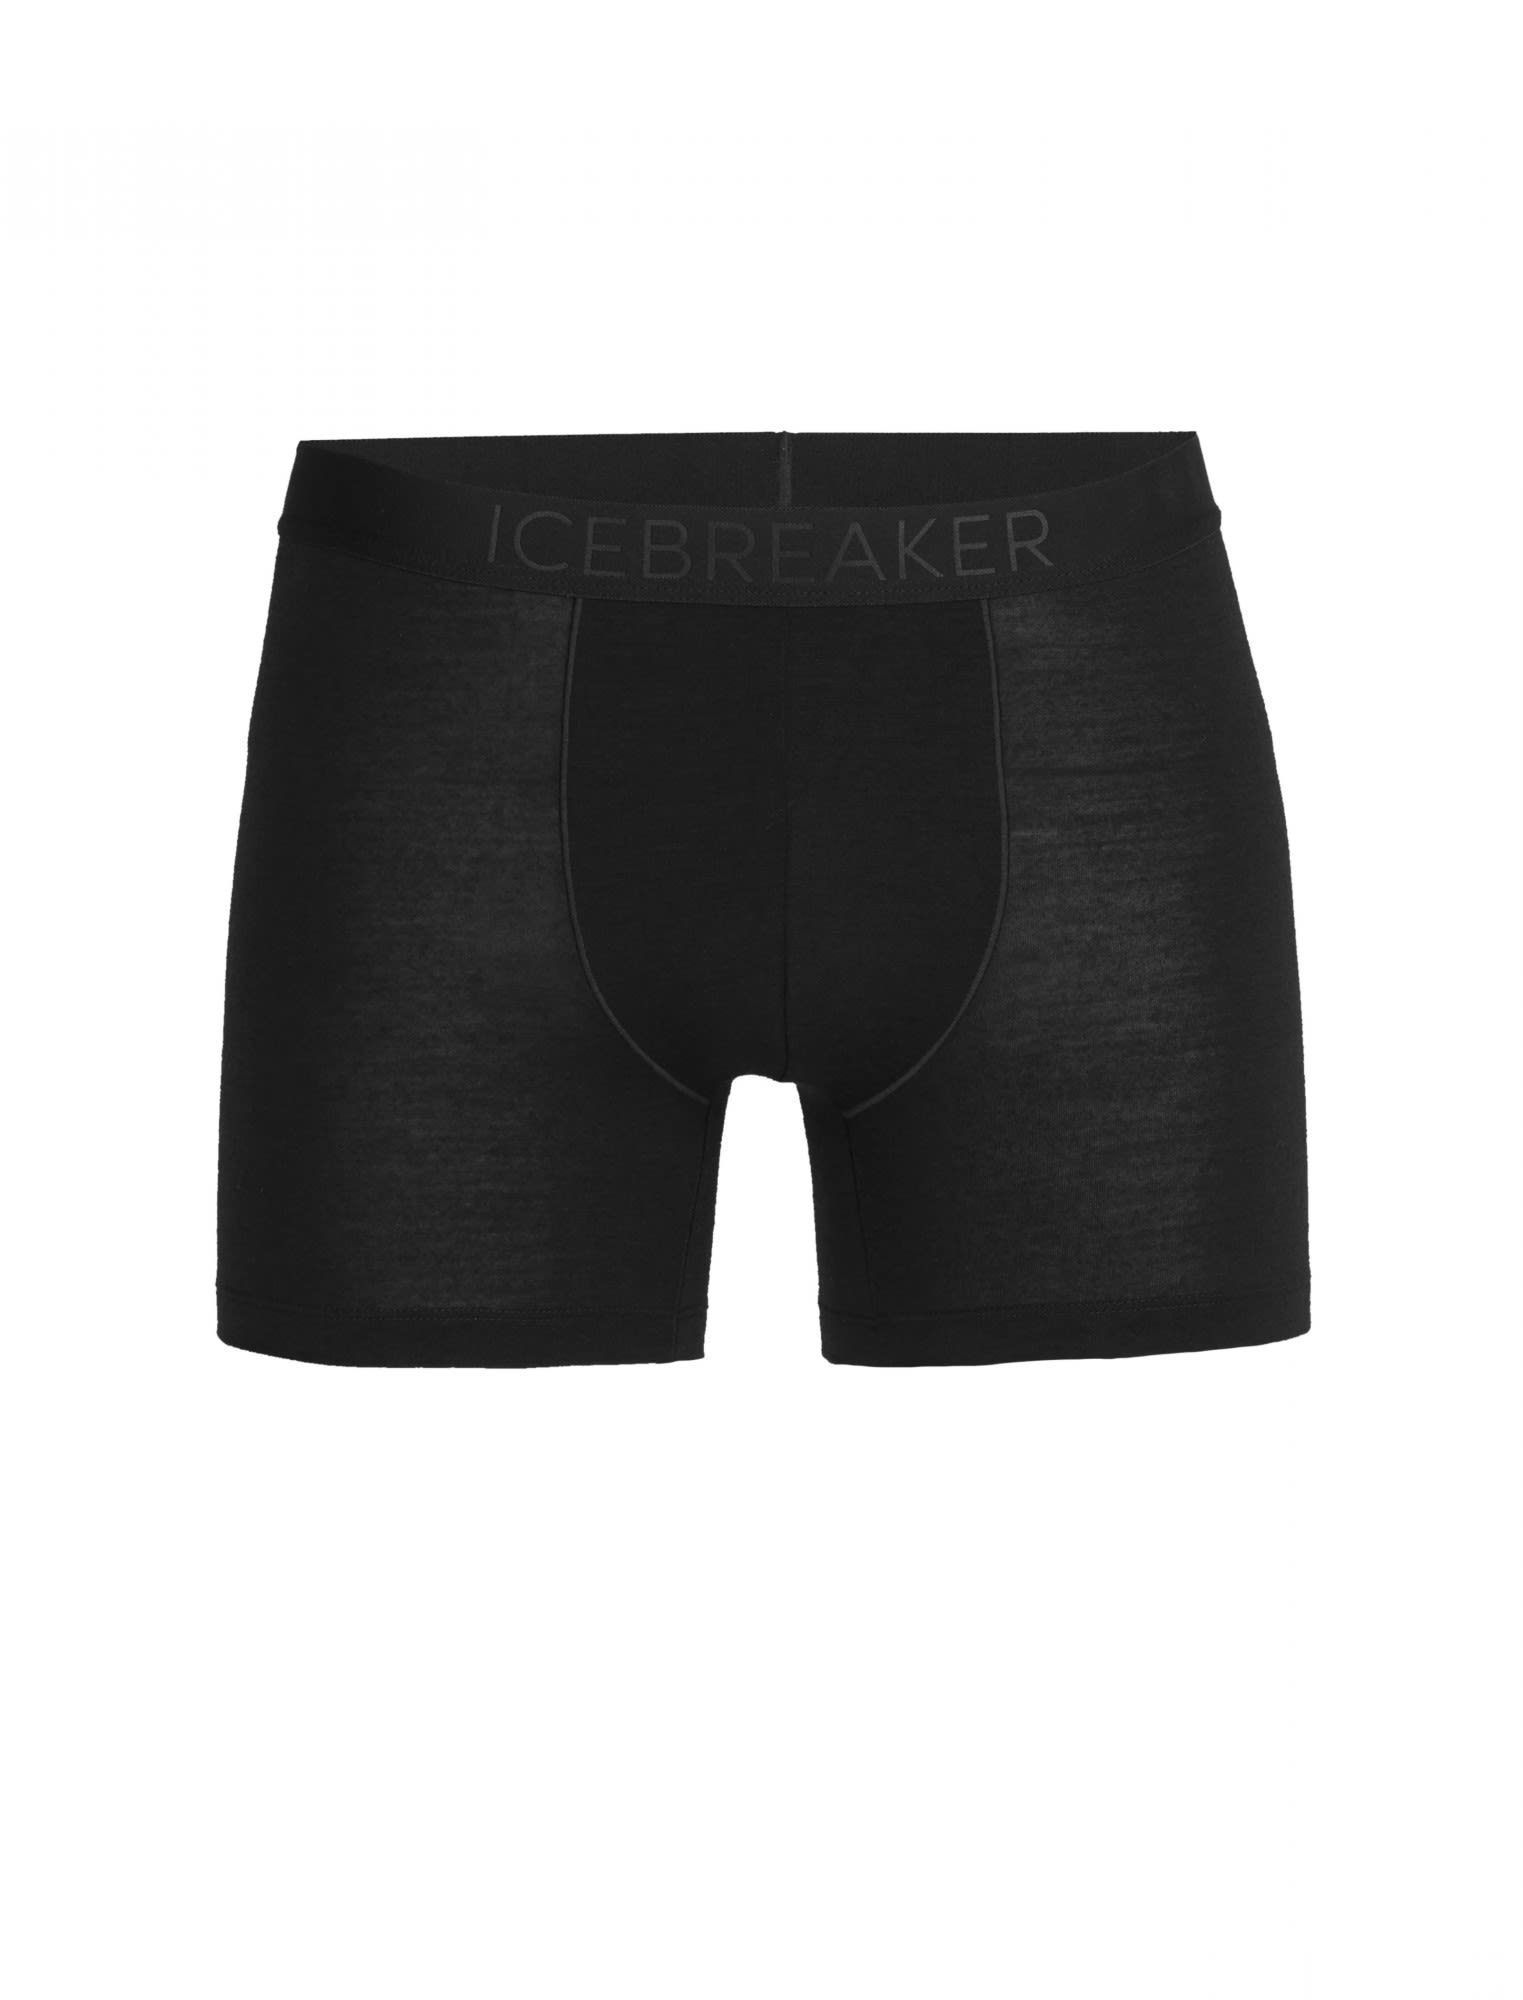 Cool-lite Herren Boxers Lange Black Unterhose Icebreaker Anatomica M Icebreaker